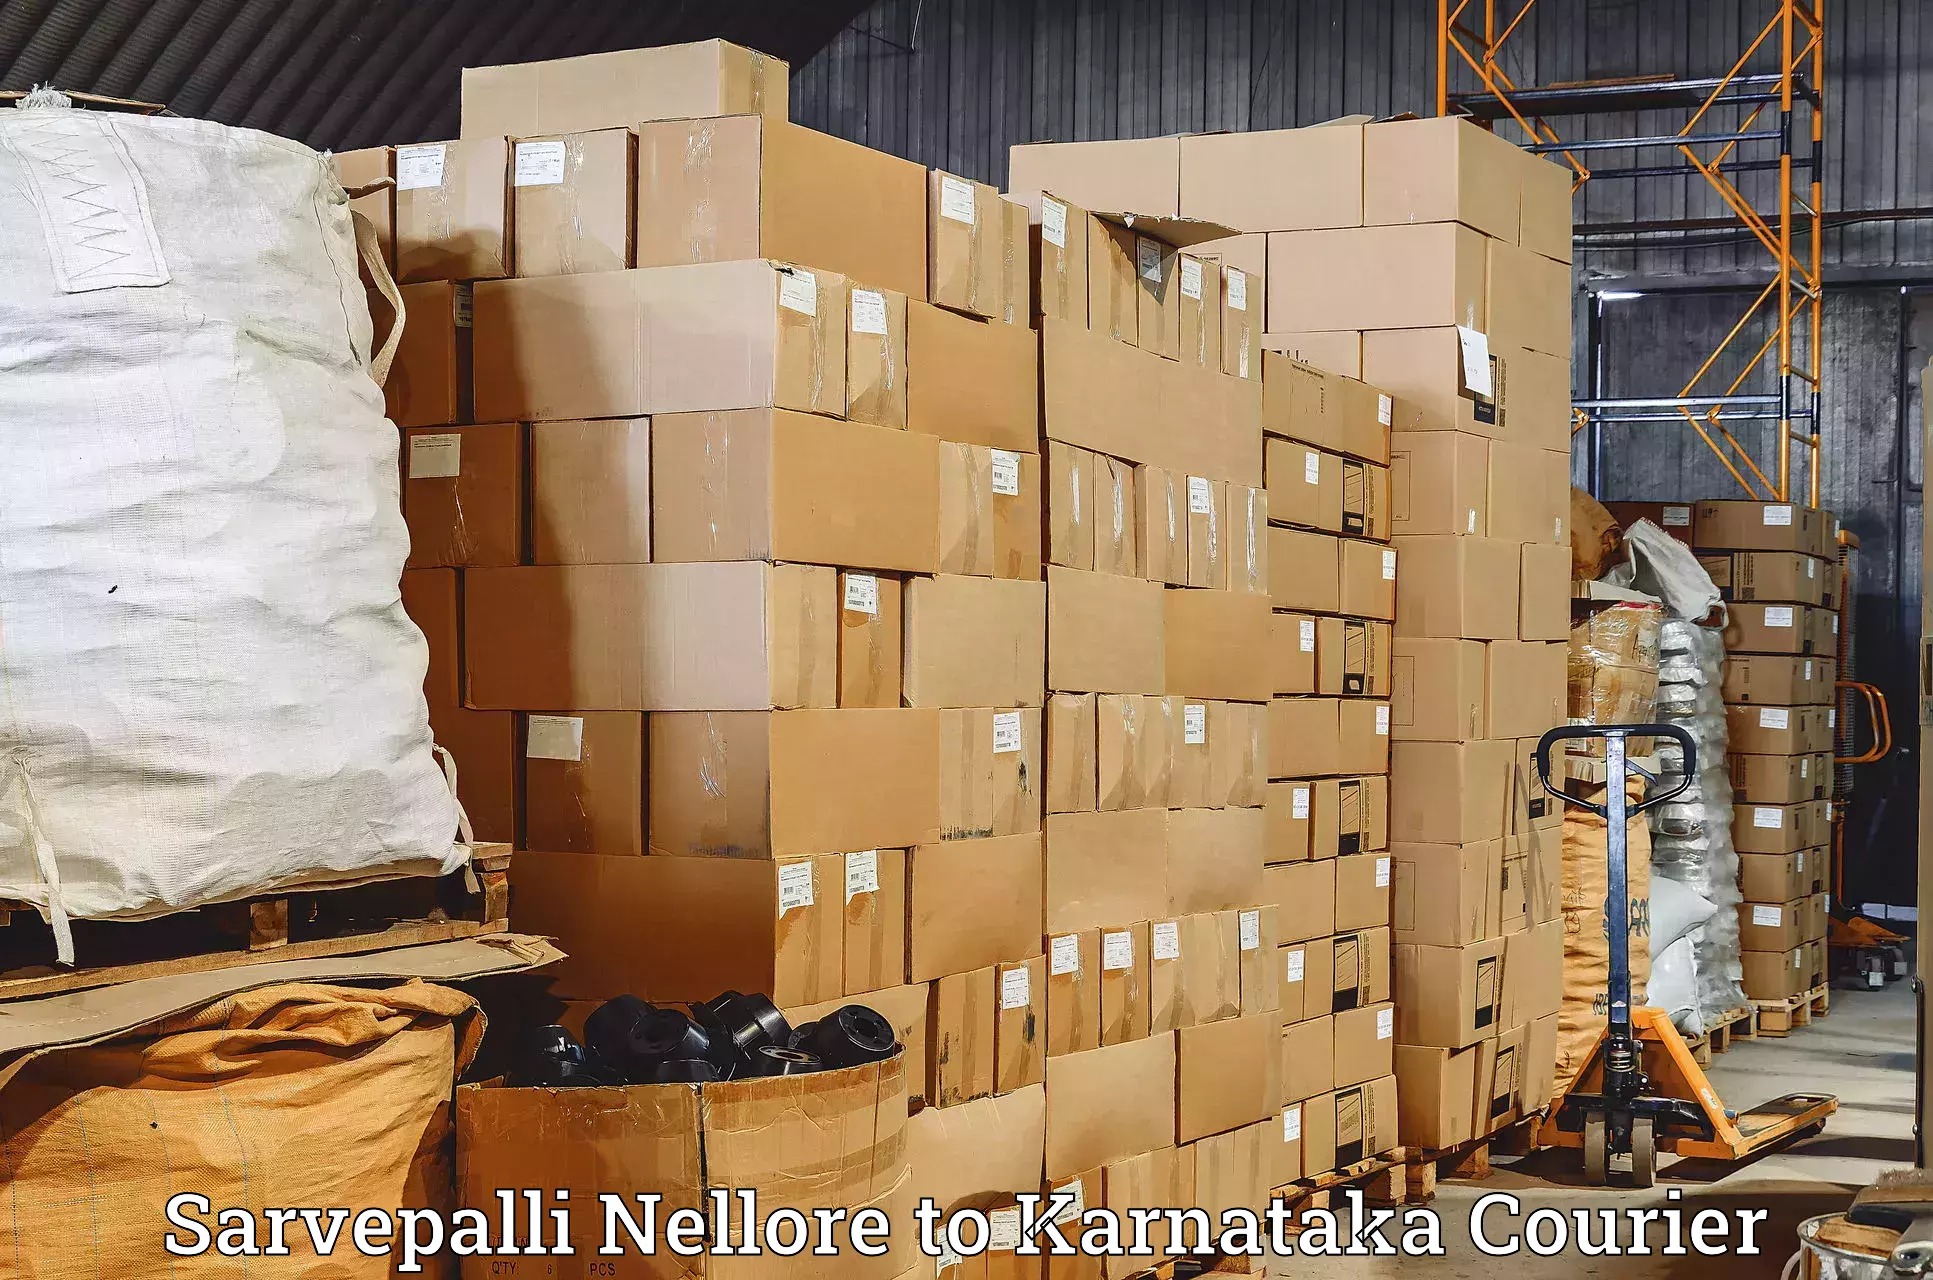 Efficient freight service Sarvepalli Nellore to Bengaluru